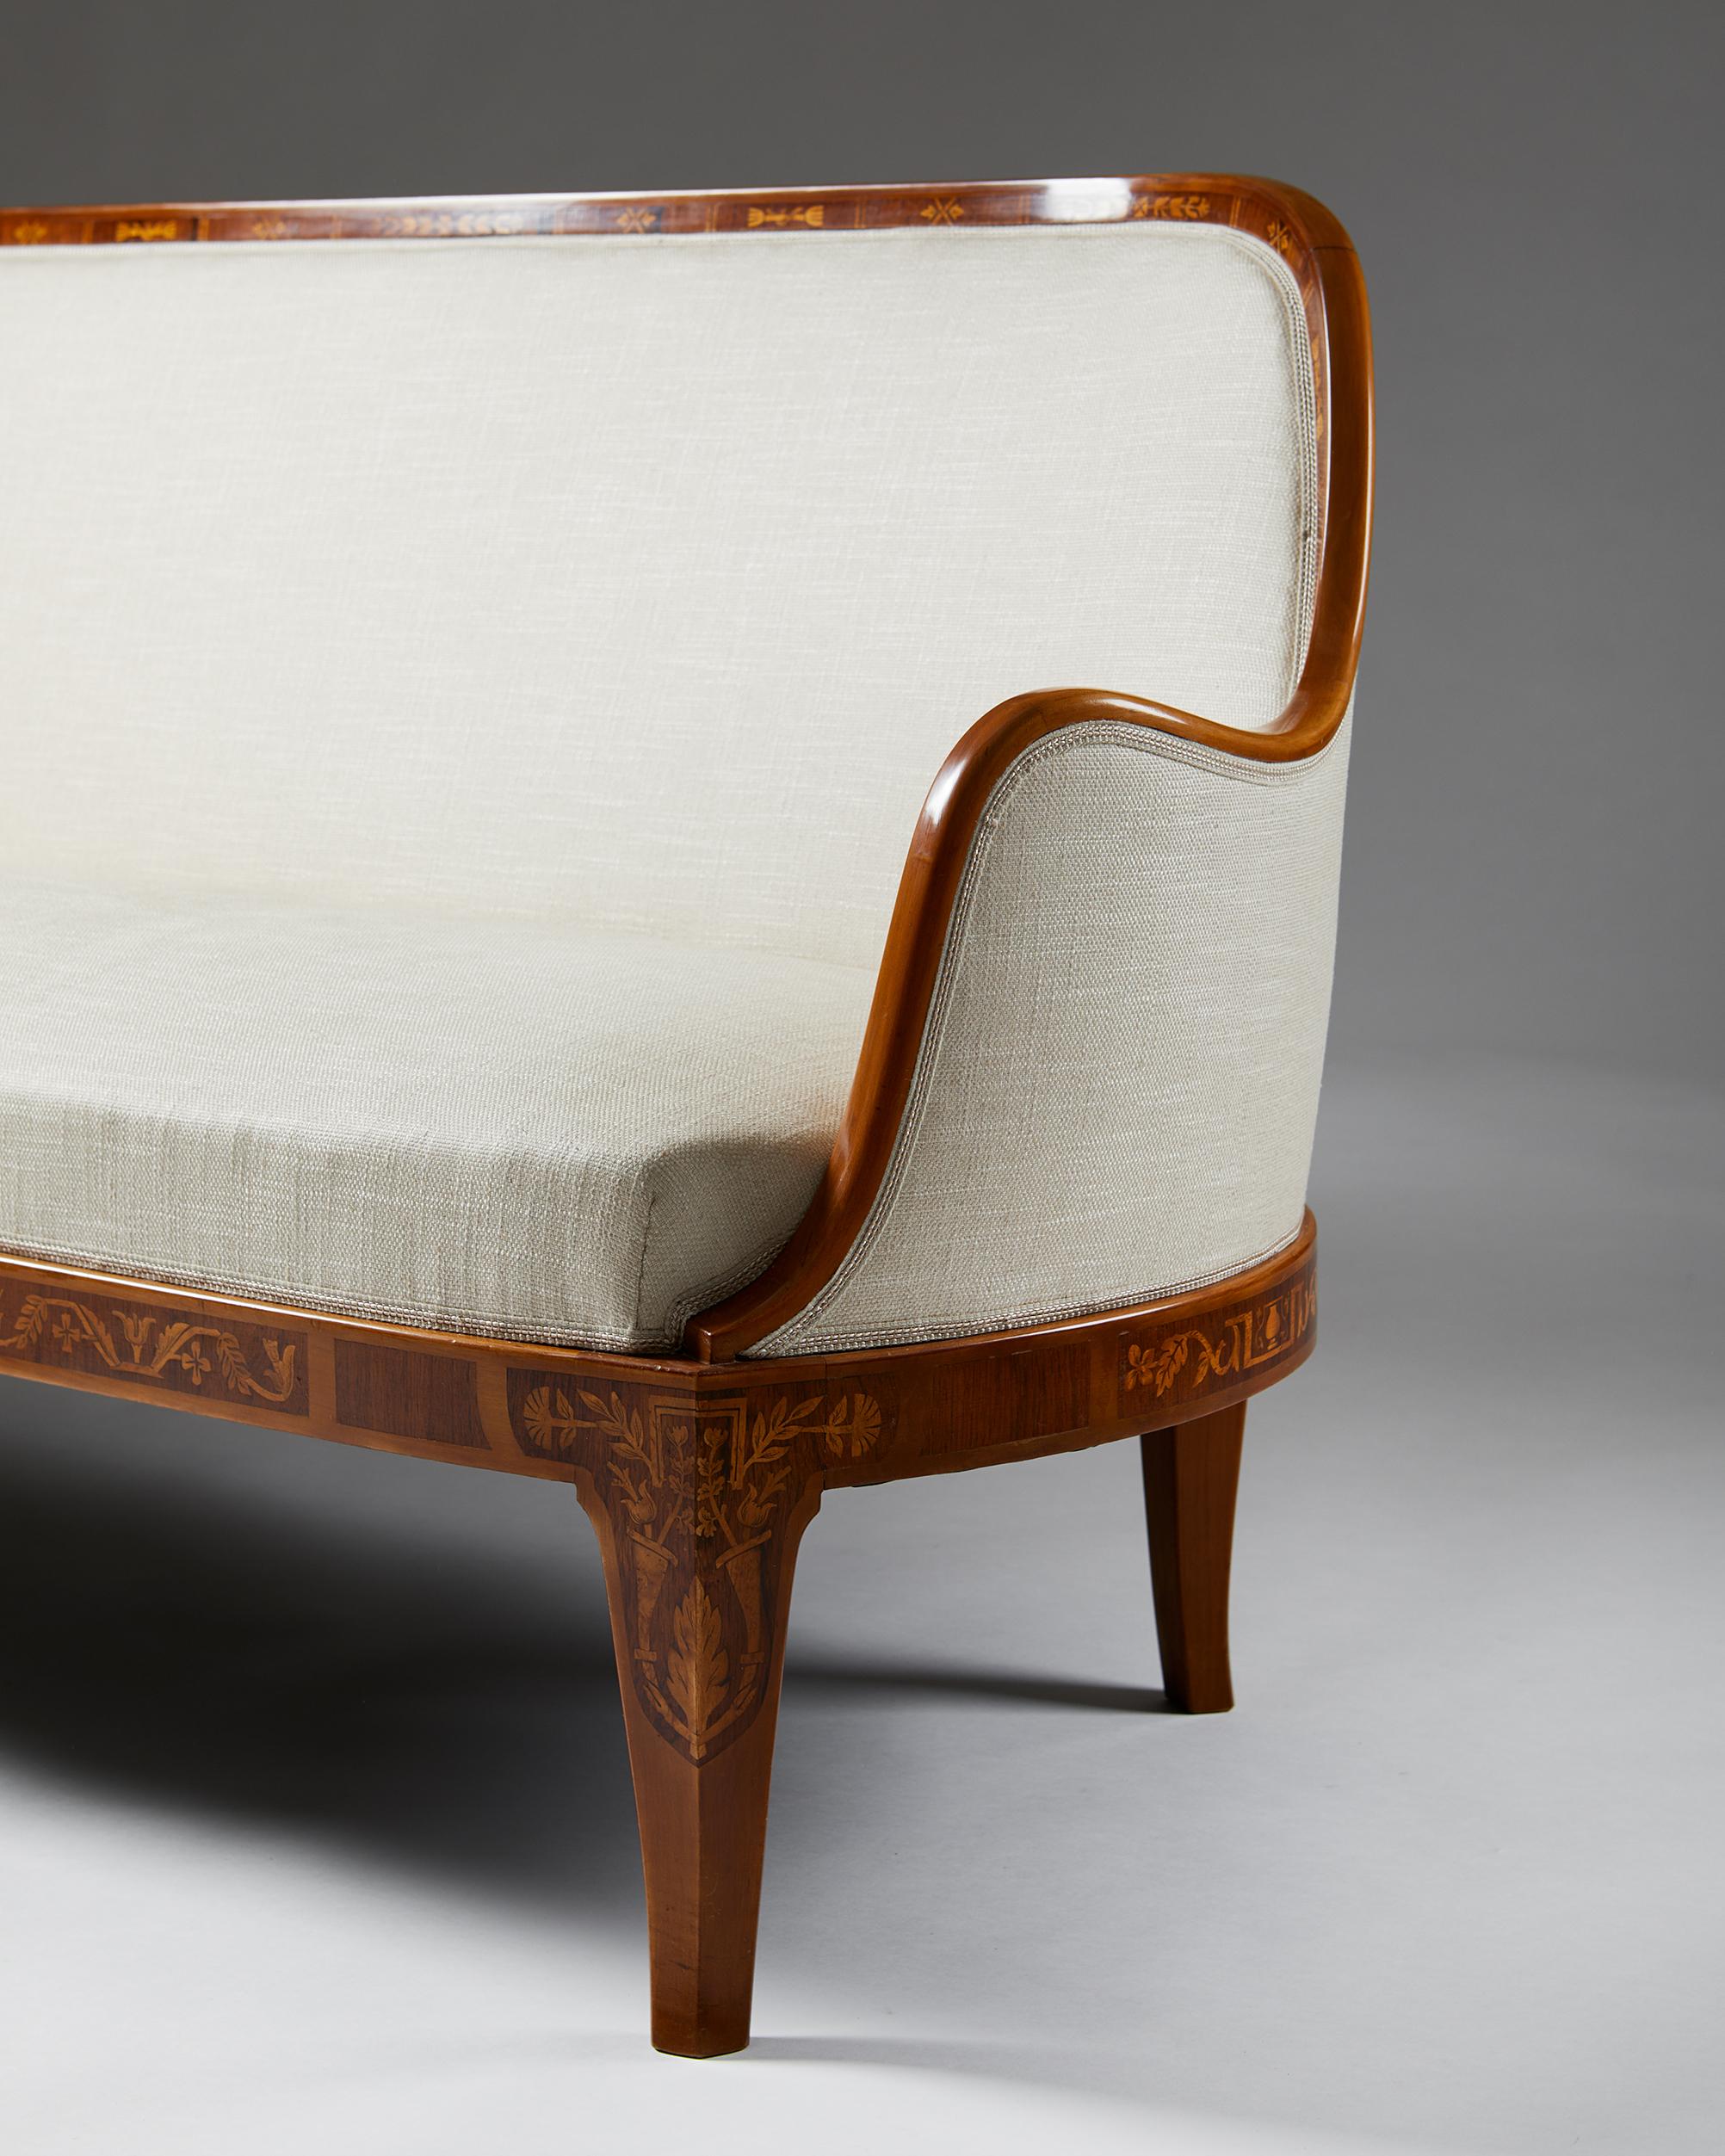 Swedish Grace Sofa Designed by Carl Malmsten, Mahogany Frame, Sweden, 1929 For Sale 1